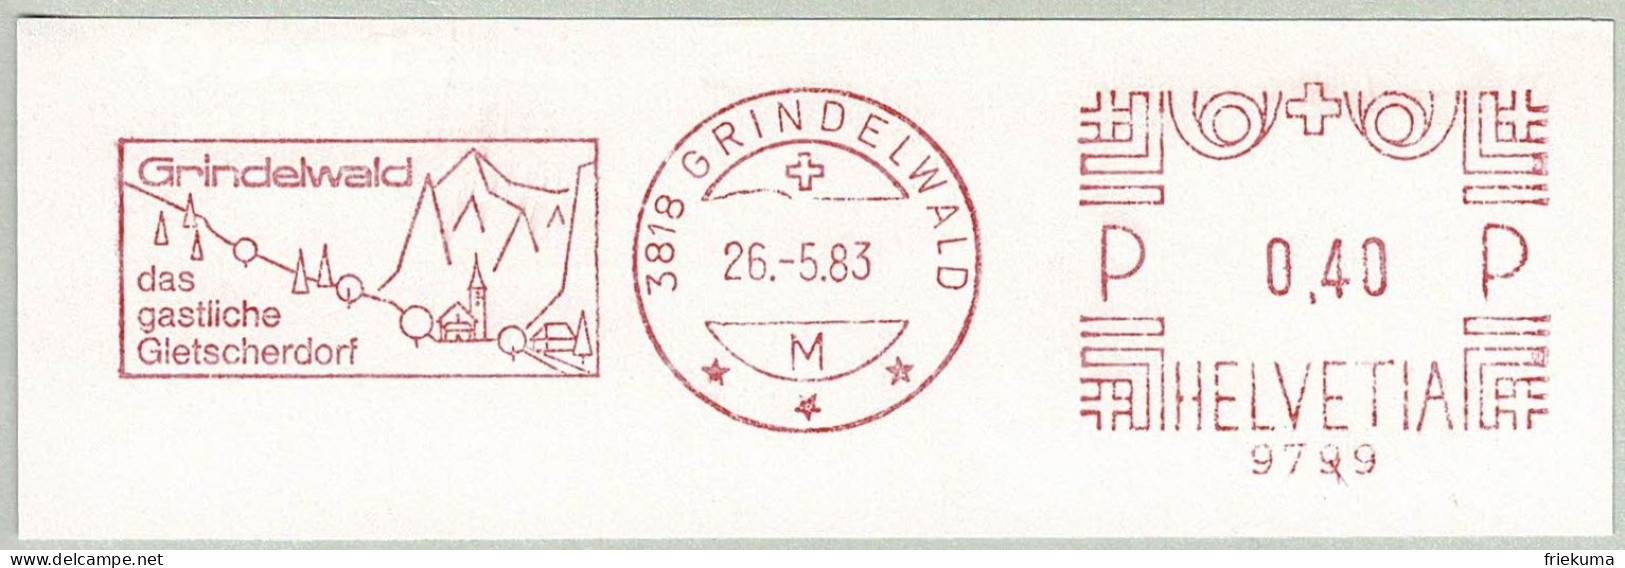 Schweiz / Helvetia 1983, Freistempel / EMA / Meterstamp Grindelwald, Gletscherdorf, Glacier - Frankeermachinen